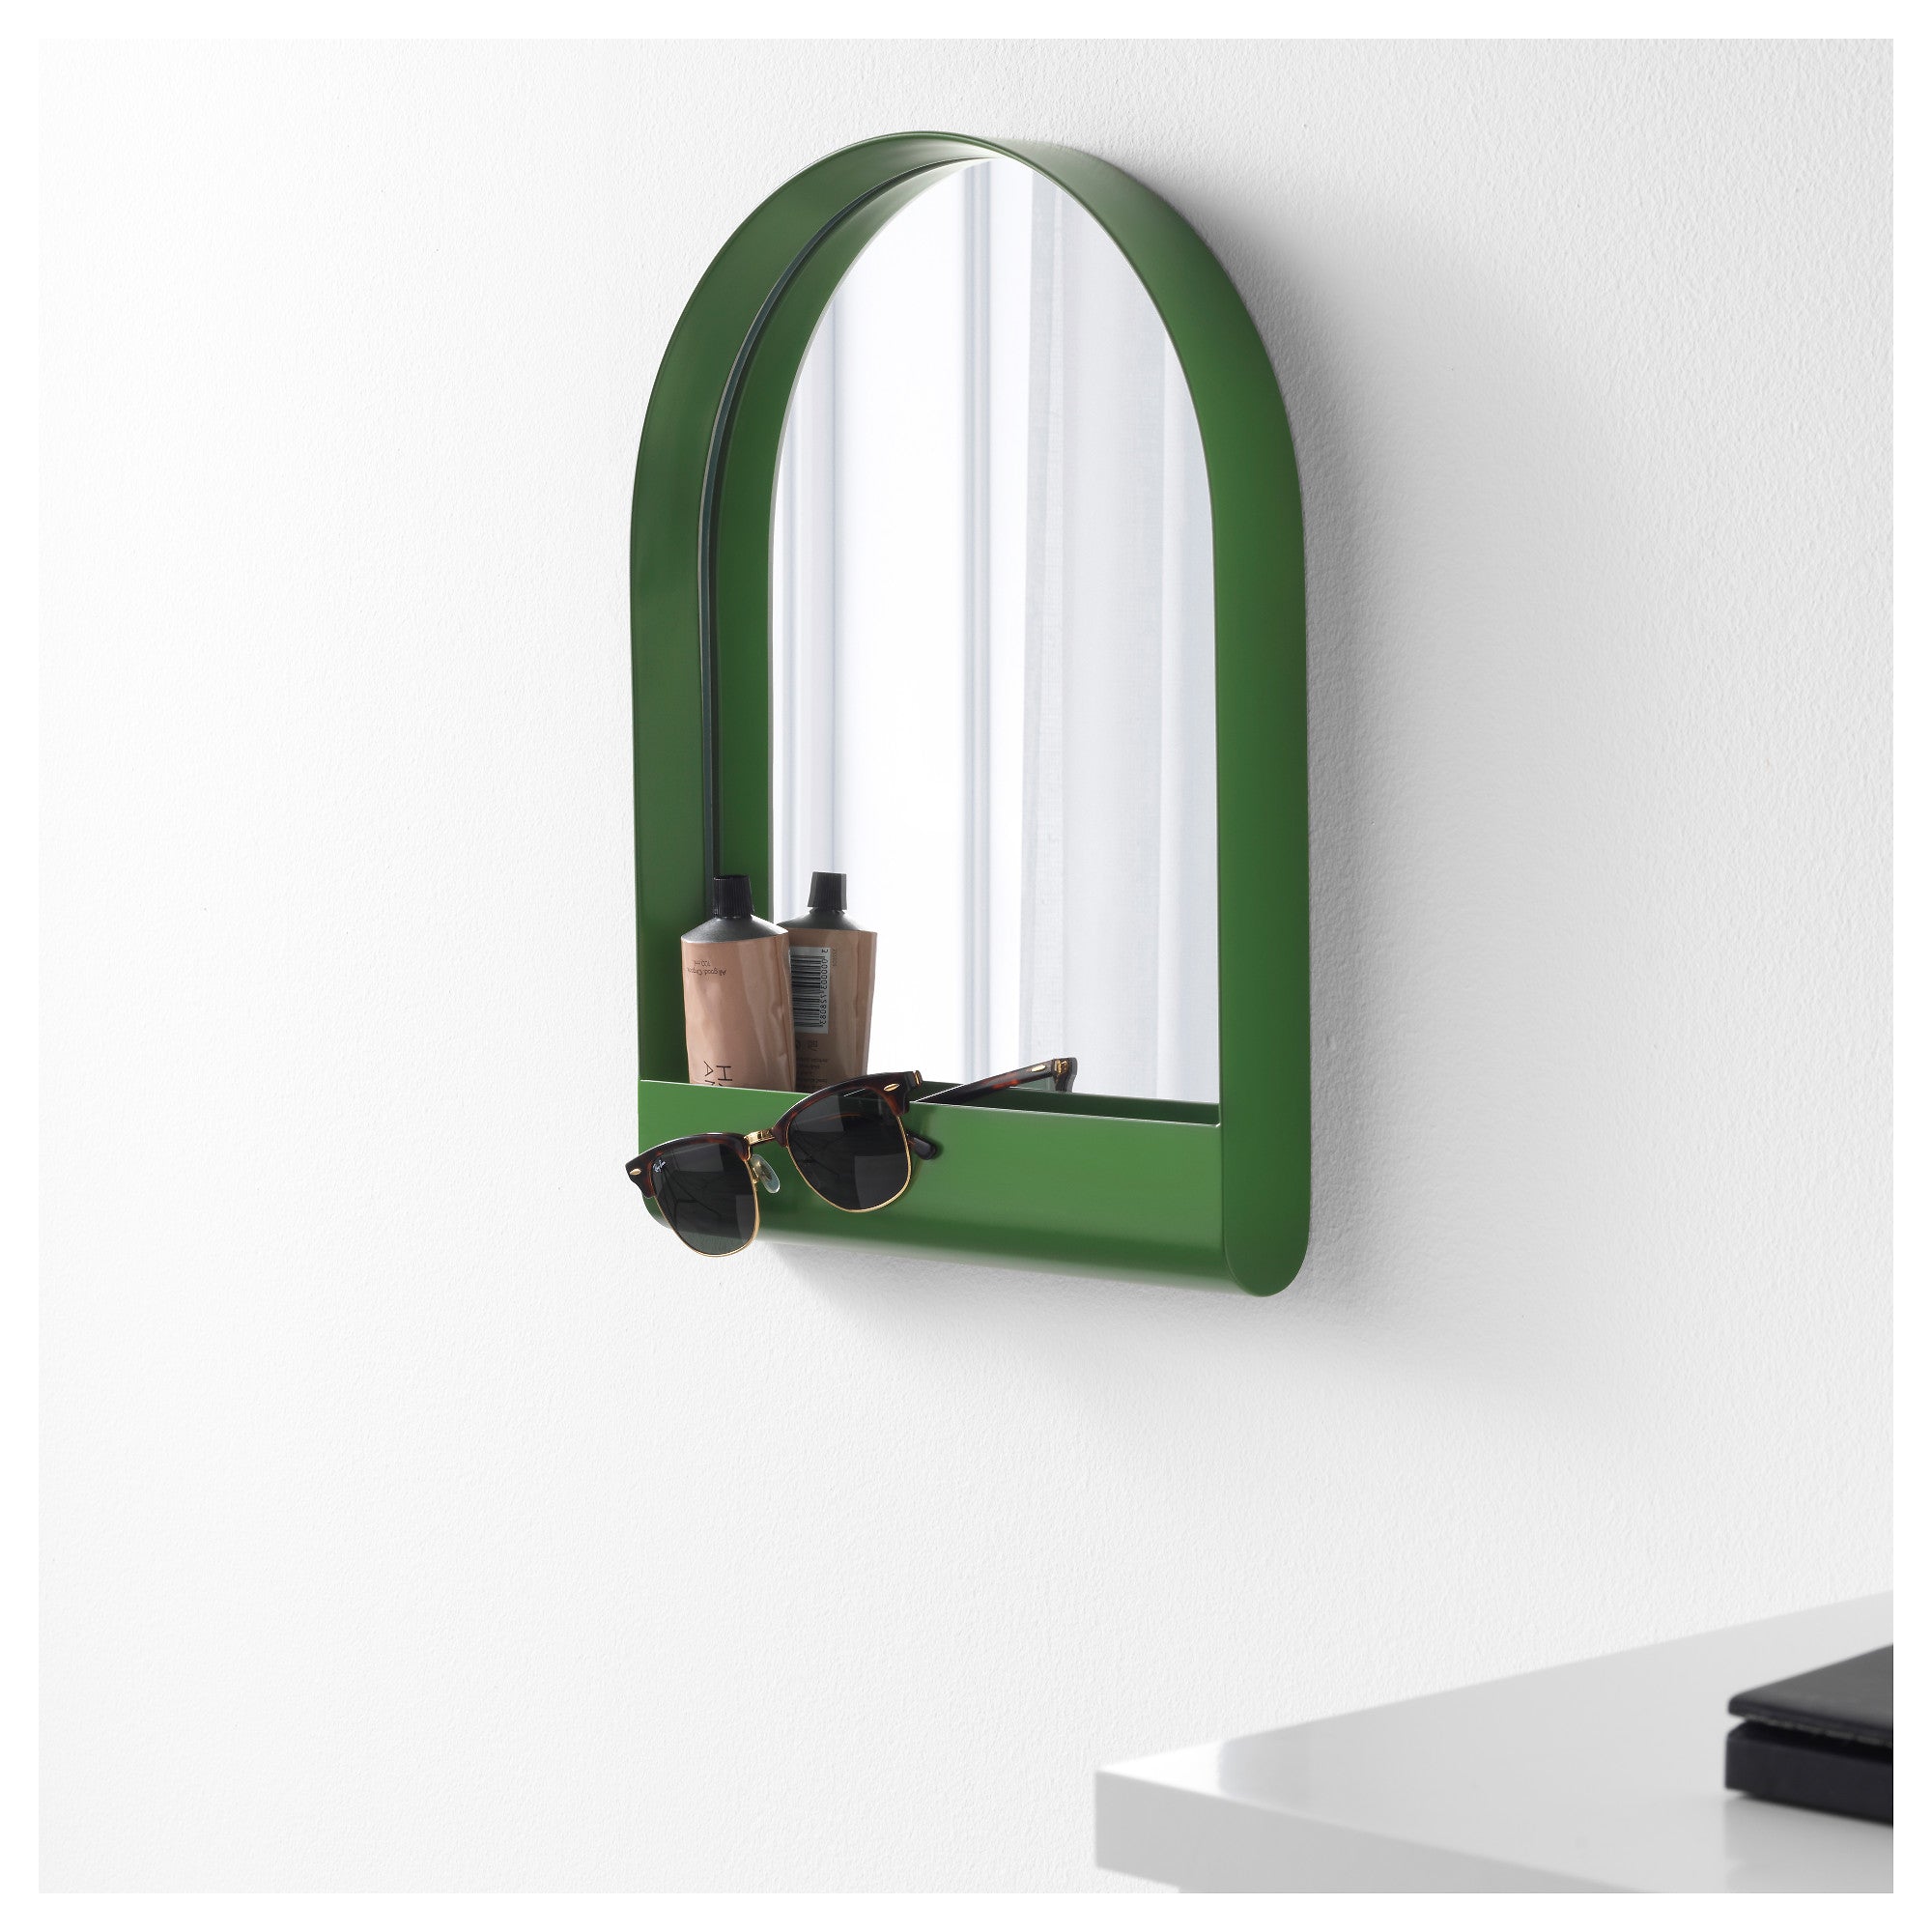 YPPERLIG Mirror, green